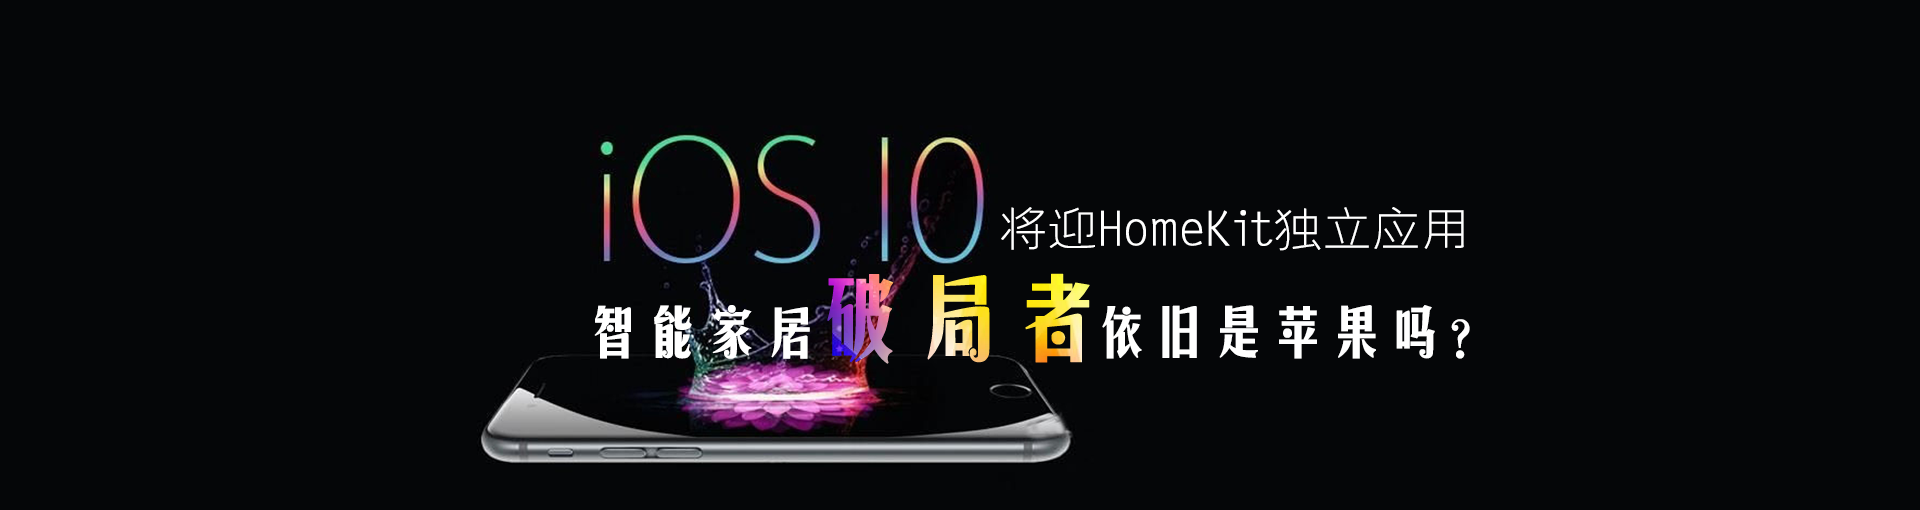 iOS 10将迎HomeKit独立应用 智能家居破局者依旧是苹果吗？